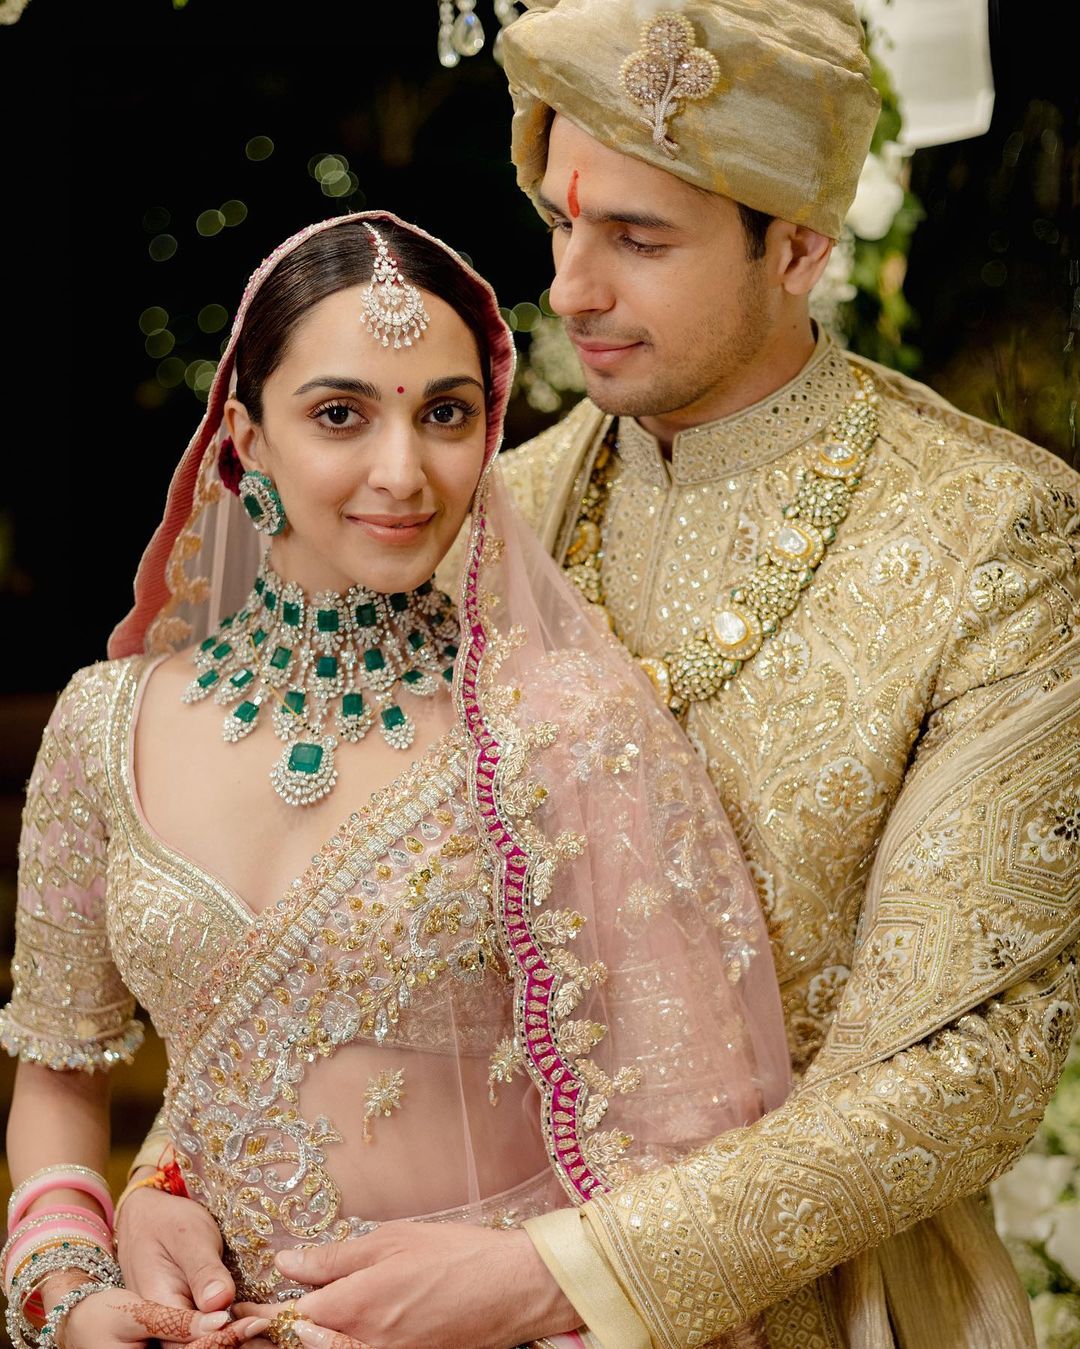 Kiara Advani Wedding Jewelry Look is the new inspiration for